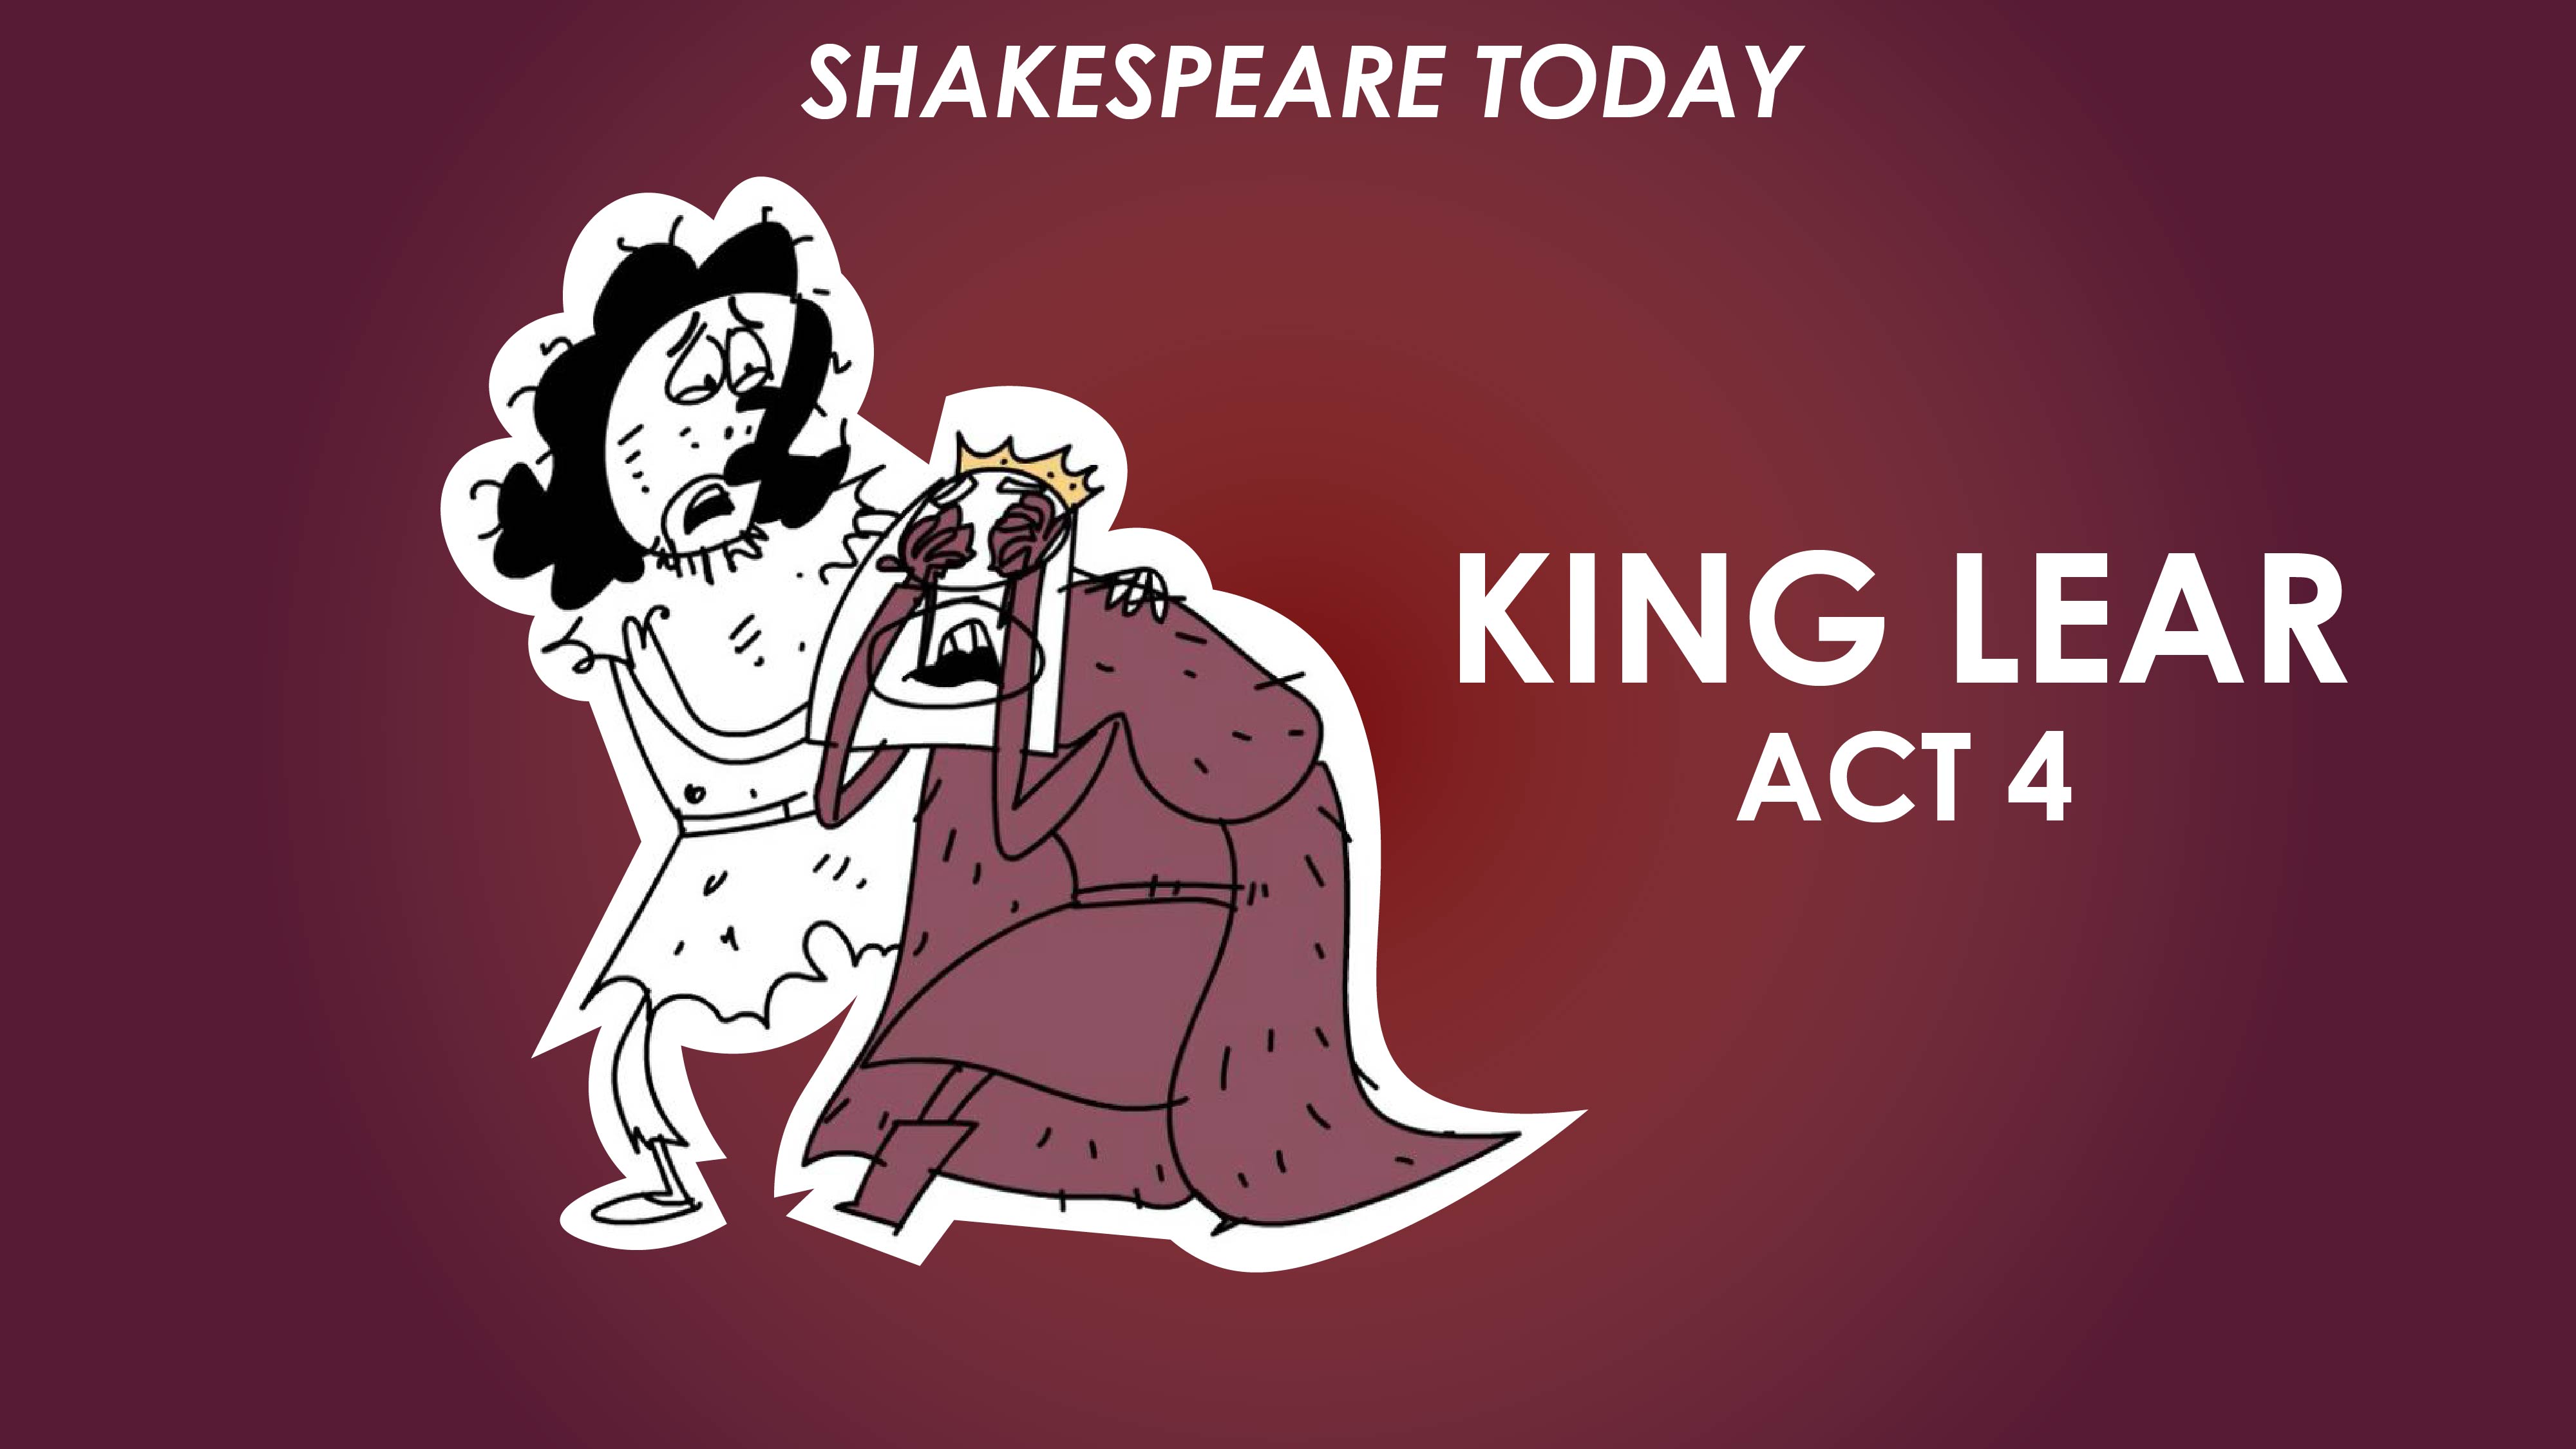 King Lear Act 4 Summary